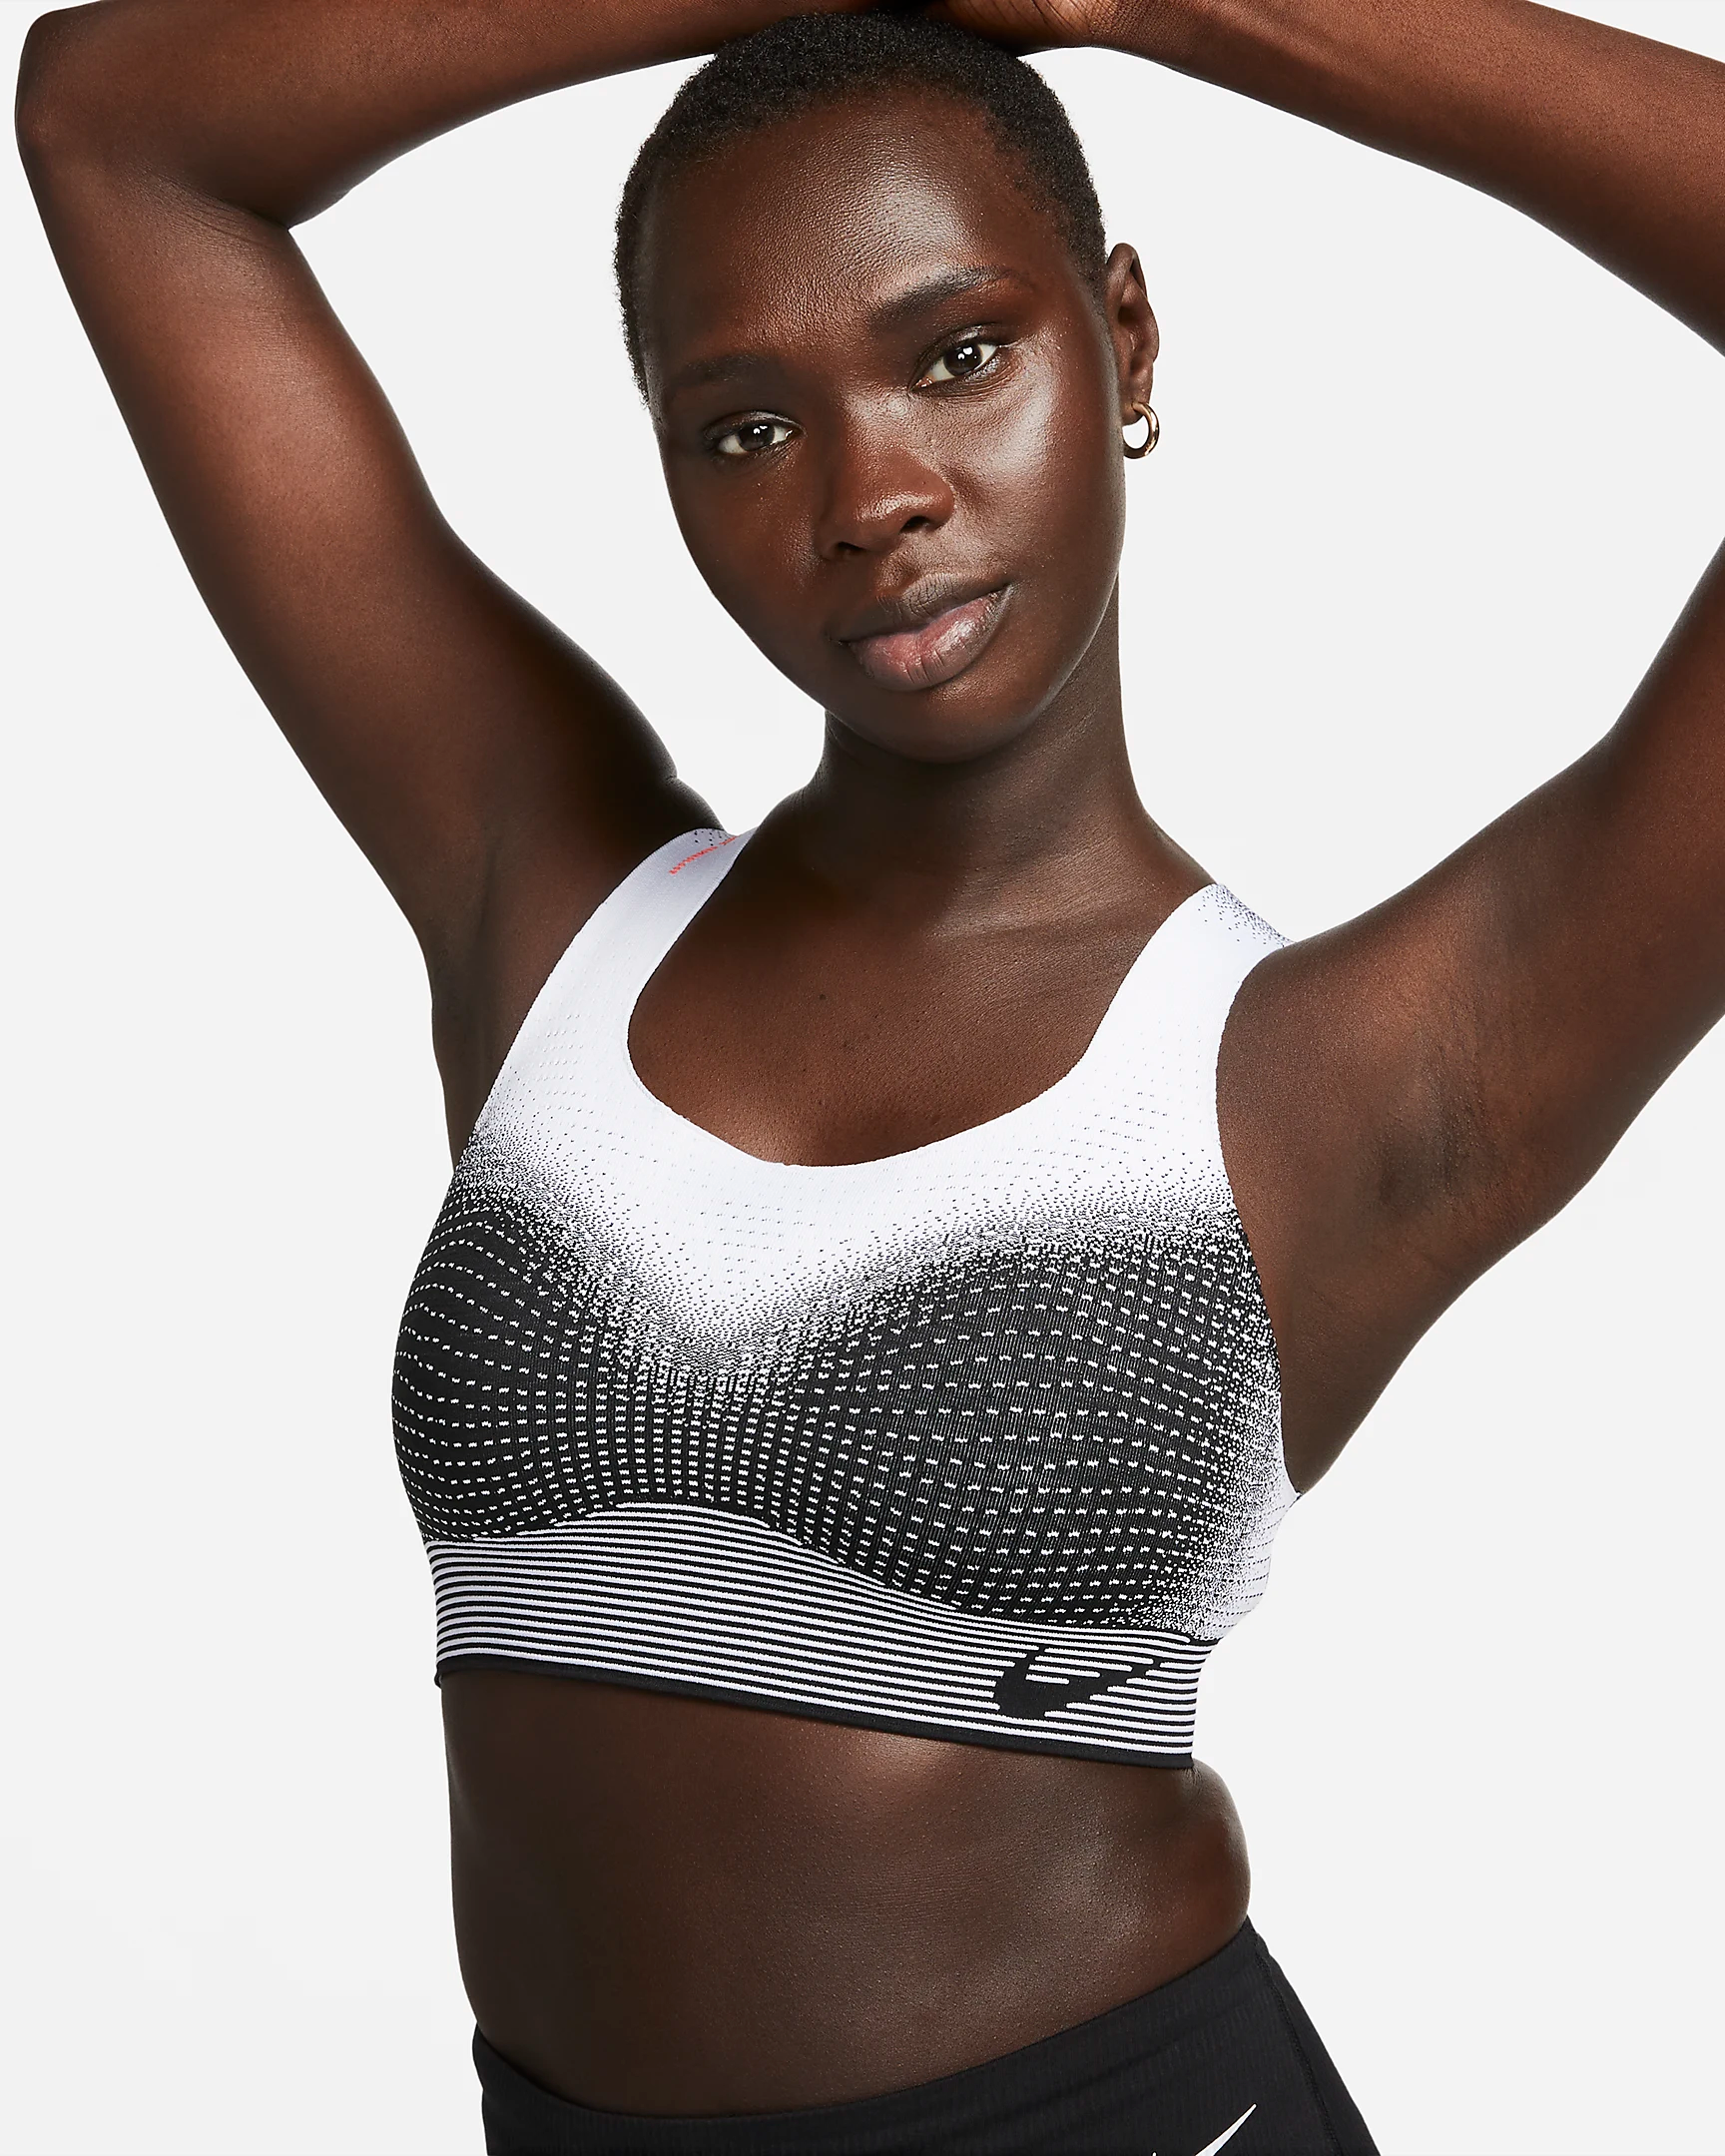 Nike sports bra for women's